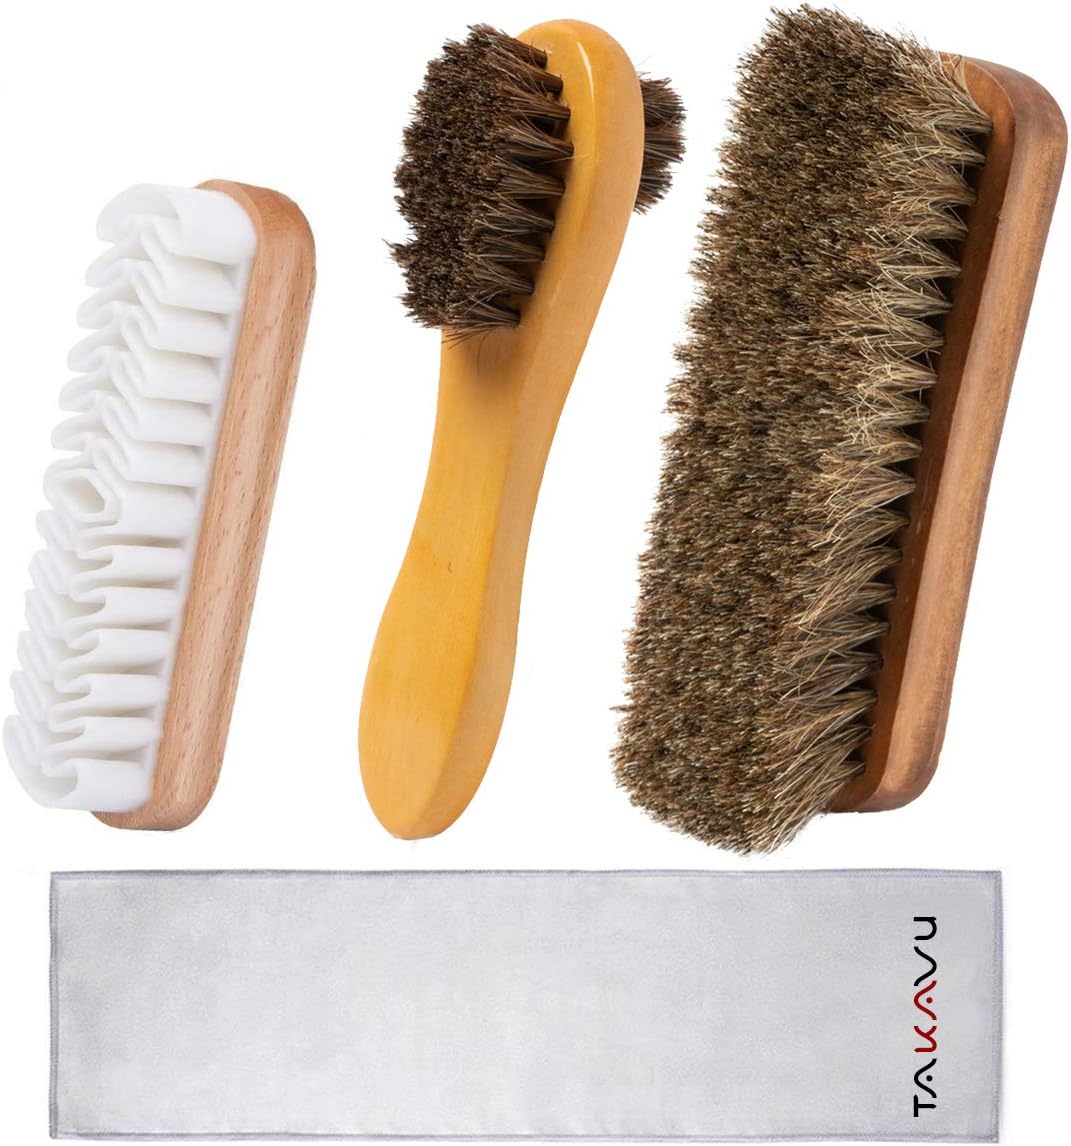 TAKAVU Shoe Shine Brushes Kit (4PCS) - 100% Soft [...]